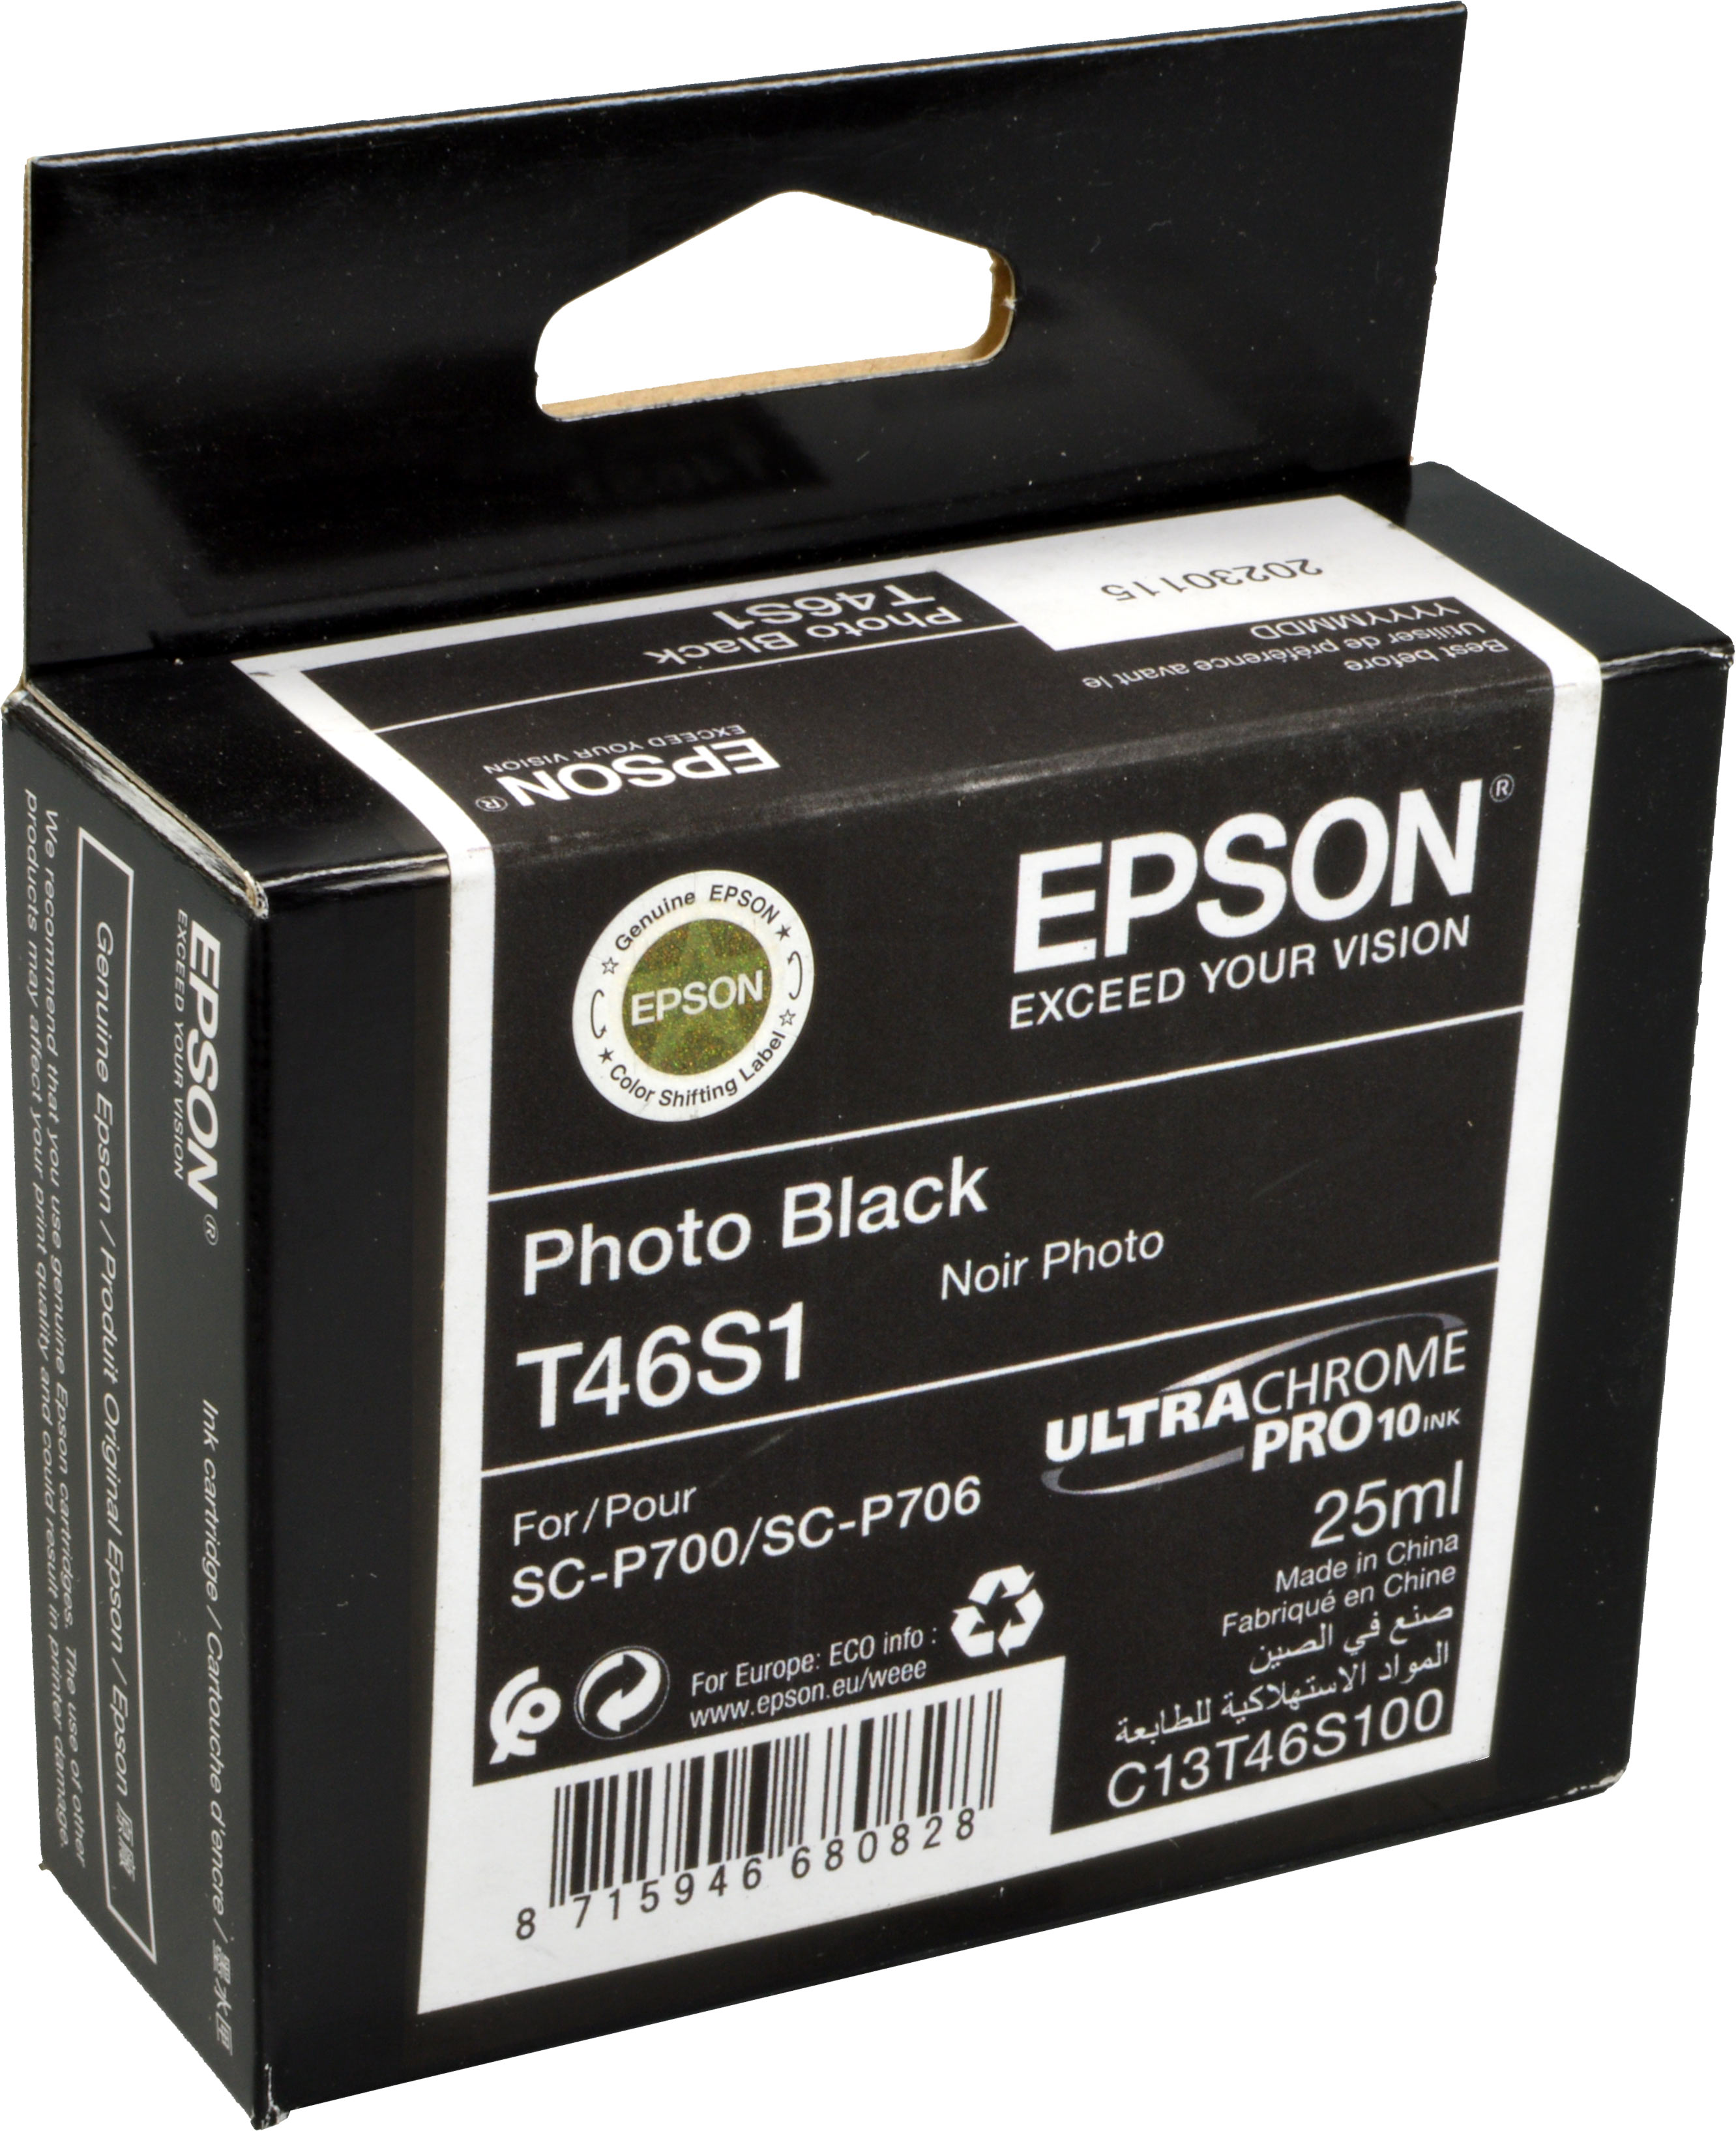 Epson Tinte C13T46S100  T46S1  foto schwarz